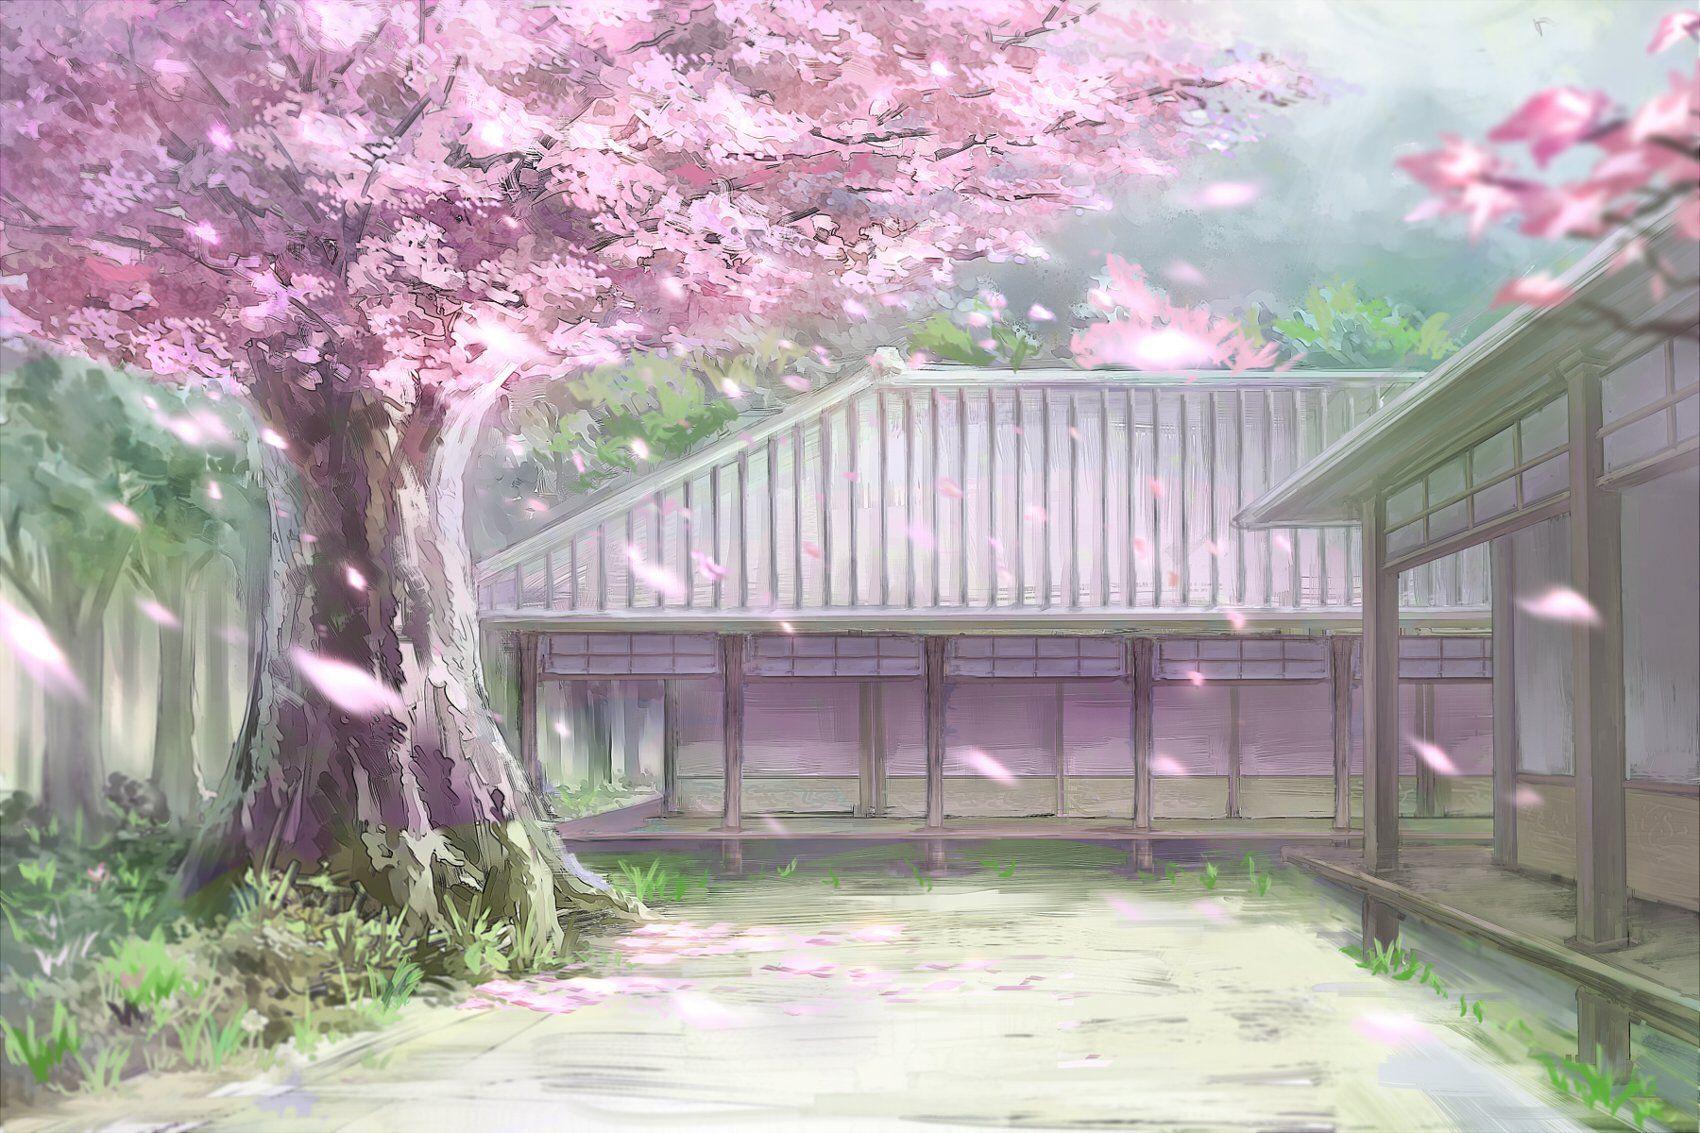 Cherry blossom mountain Sakura anime pan... | Stock Video | Pond5